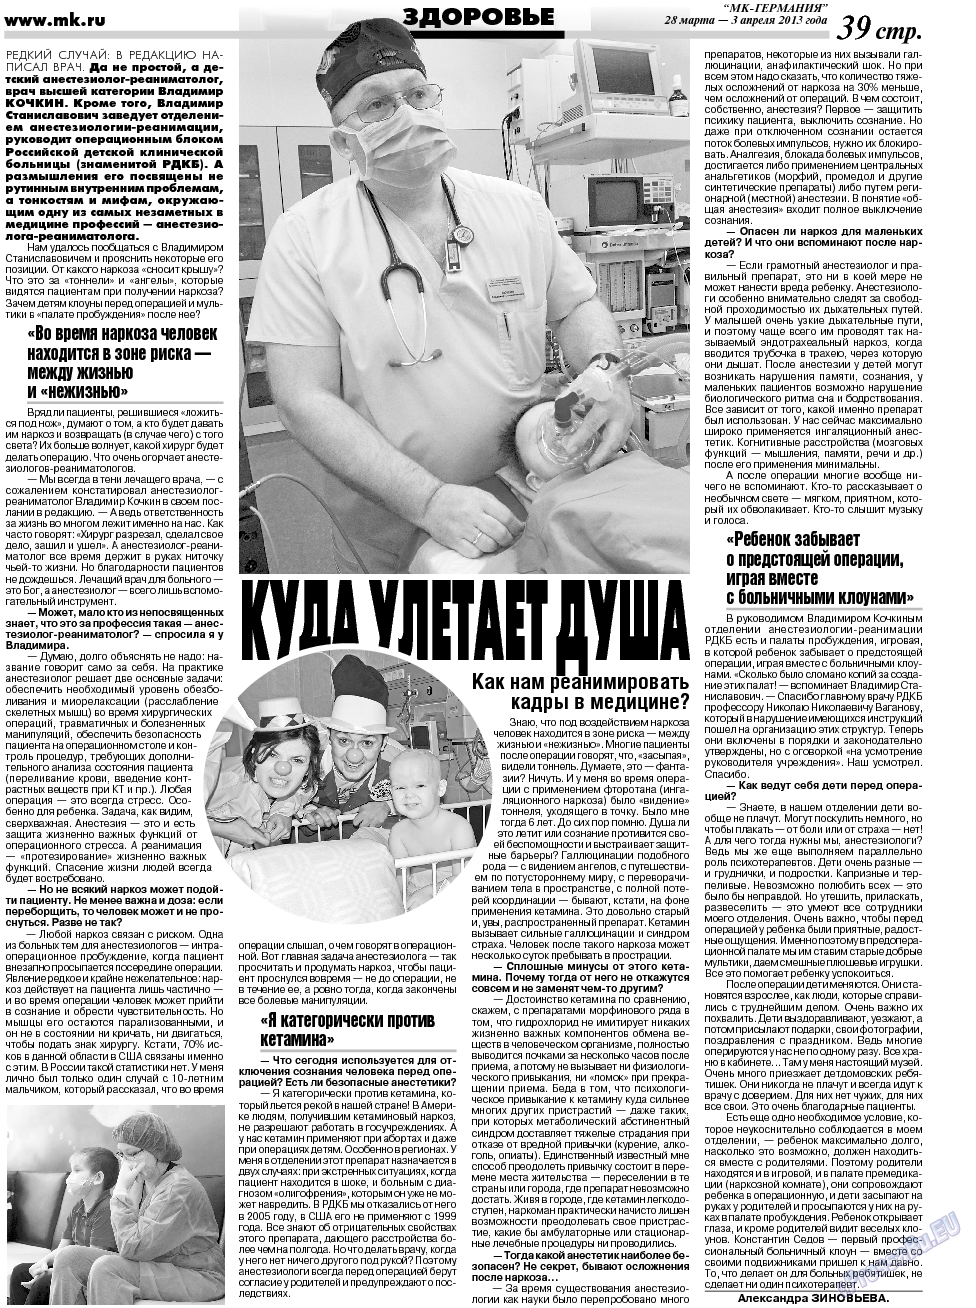 МК-Германия, газета. 2013 №13 стр.39